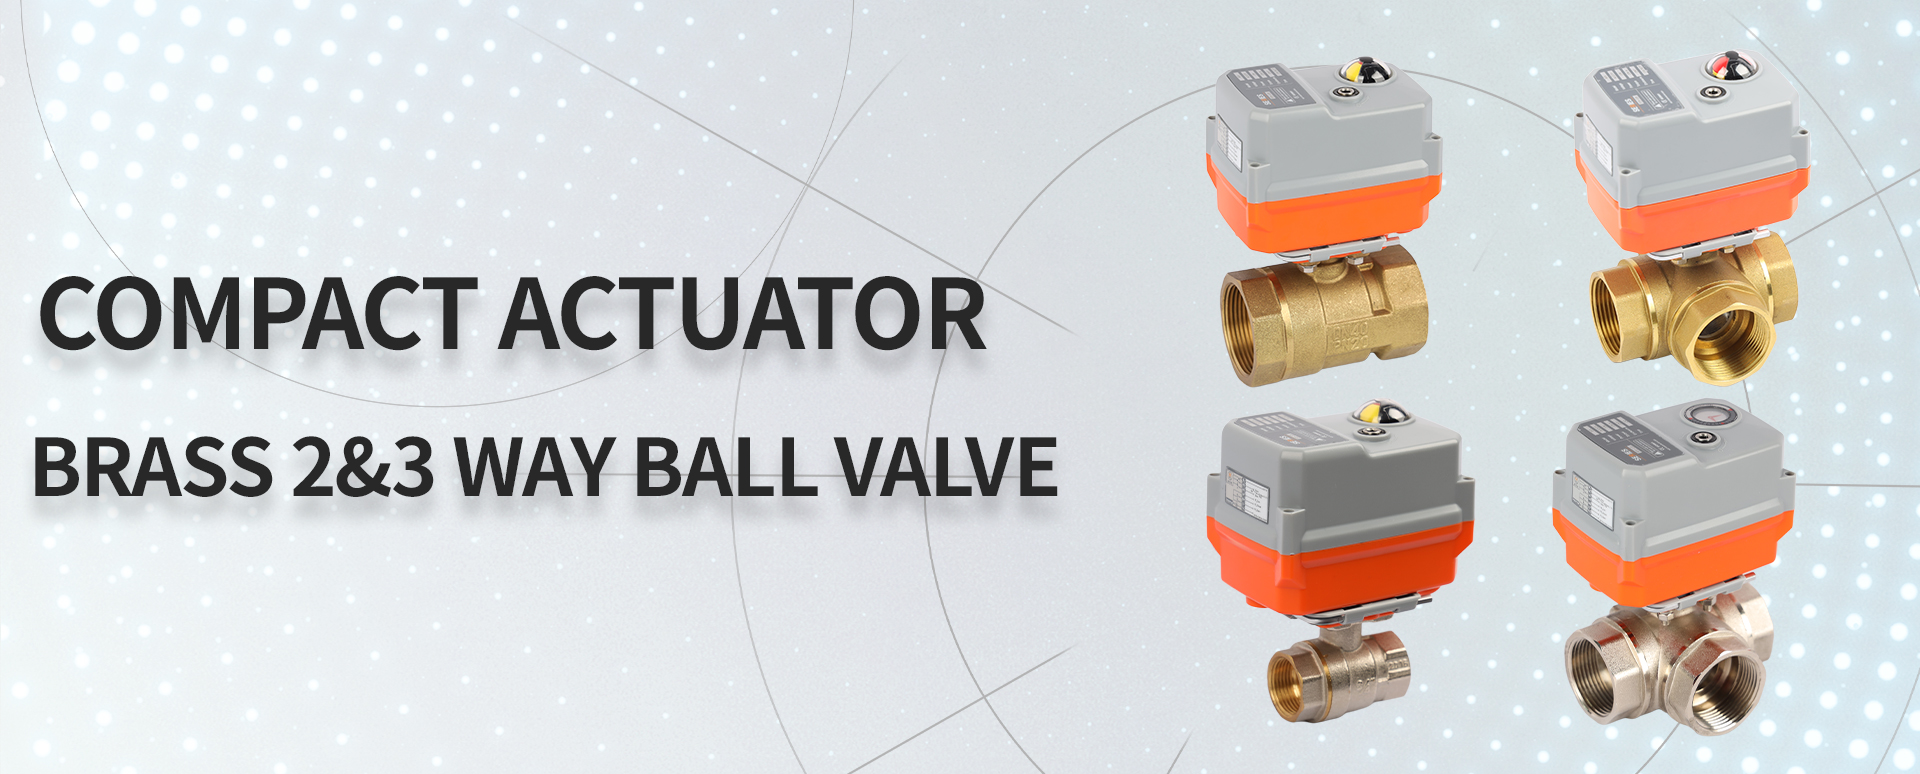 Miniature Electric Actuator Valve in Clean Energy Equipment